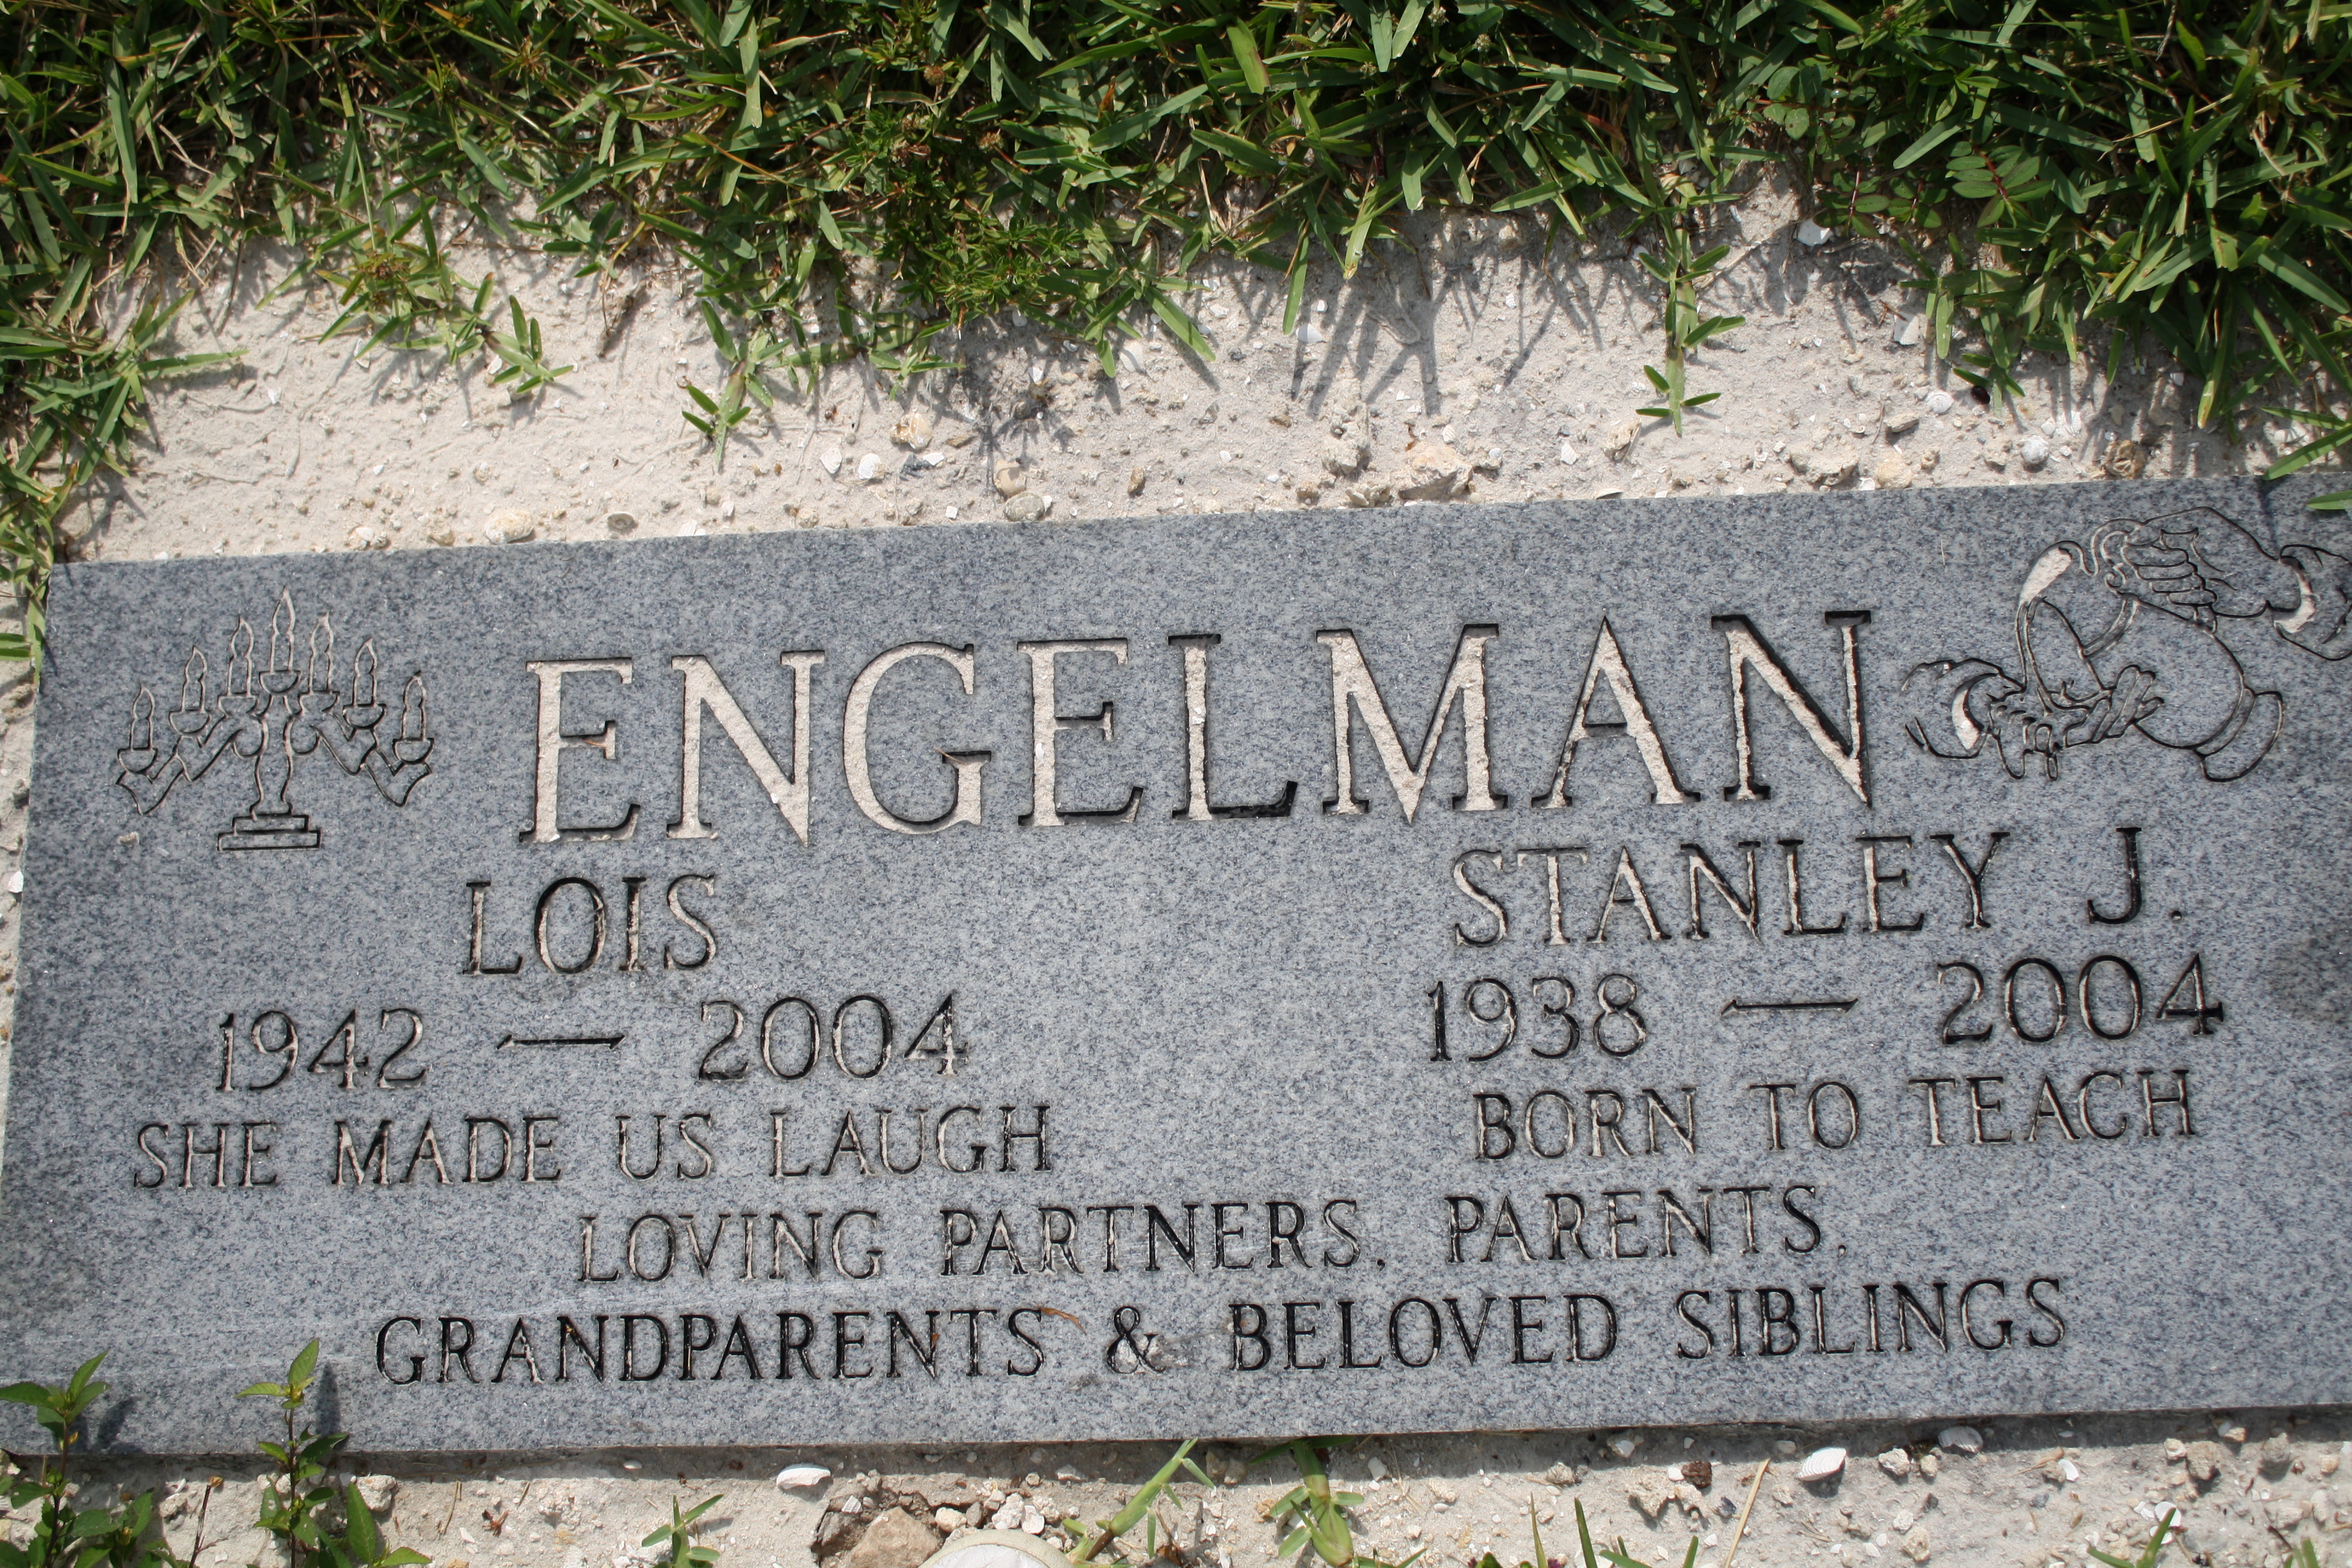 Lois Engelman